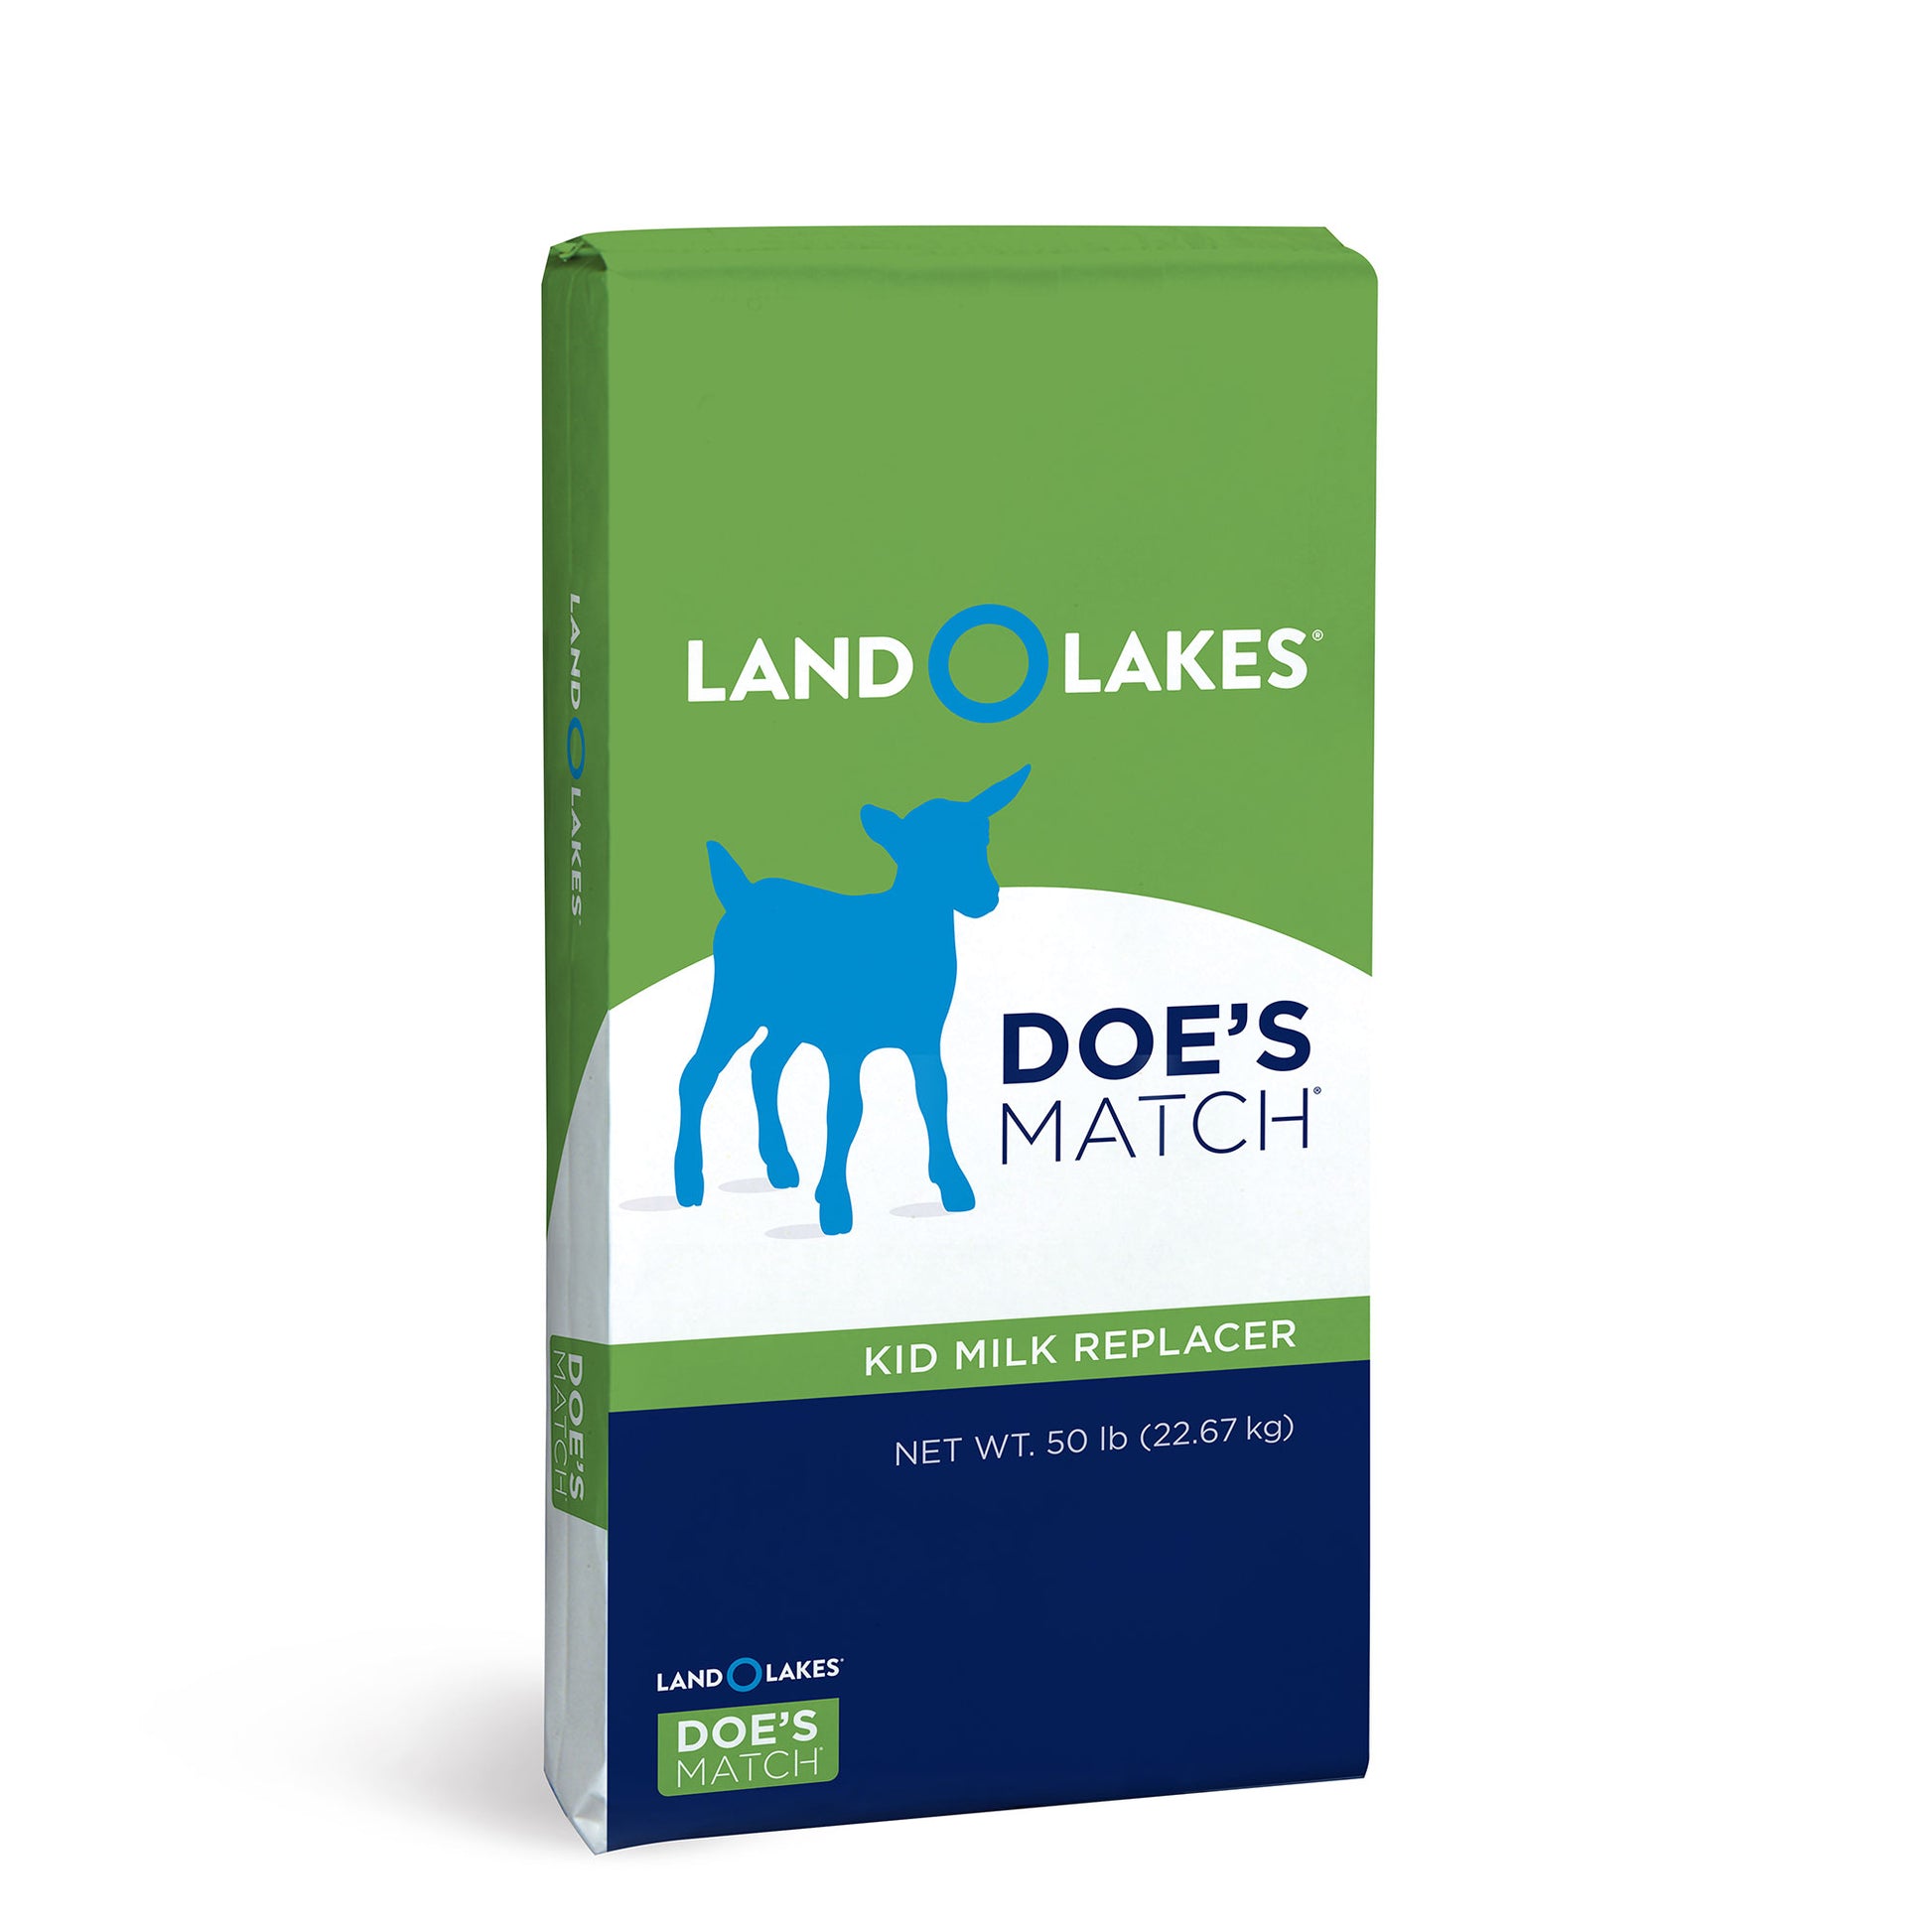 LAND O LAKES Doe's Match Kid Milk Replacer 50 Pound feed bag